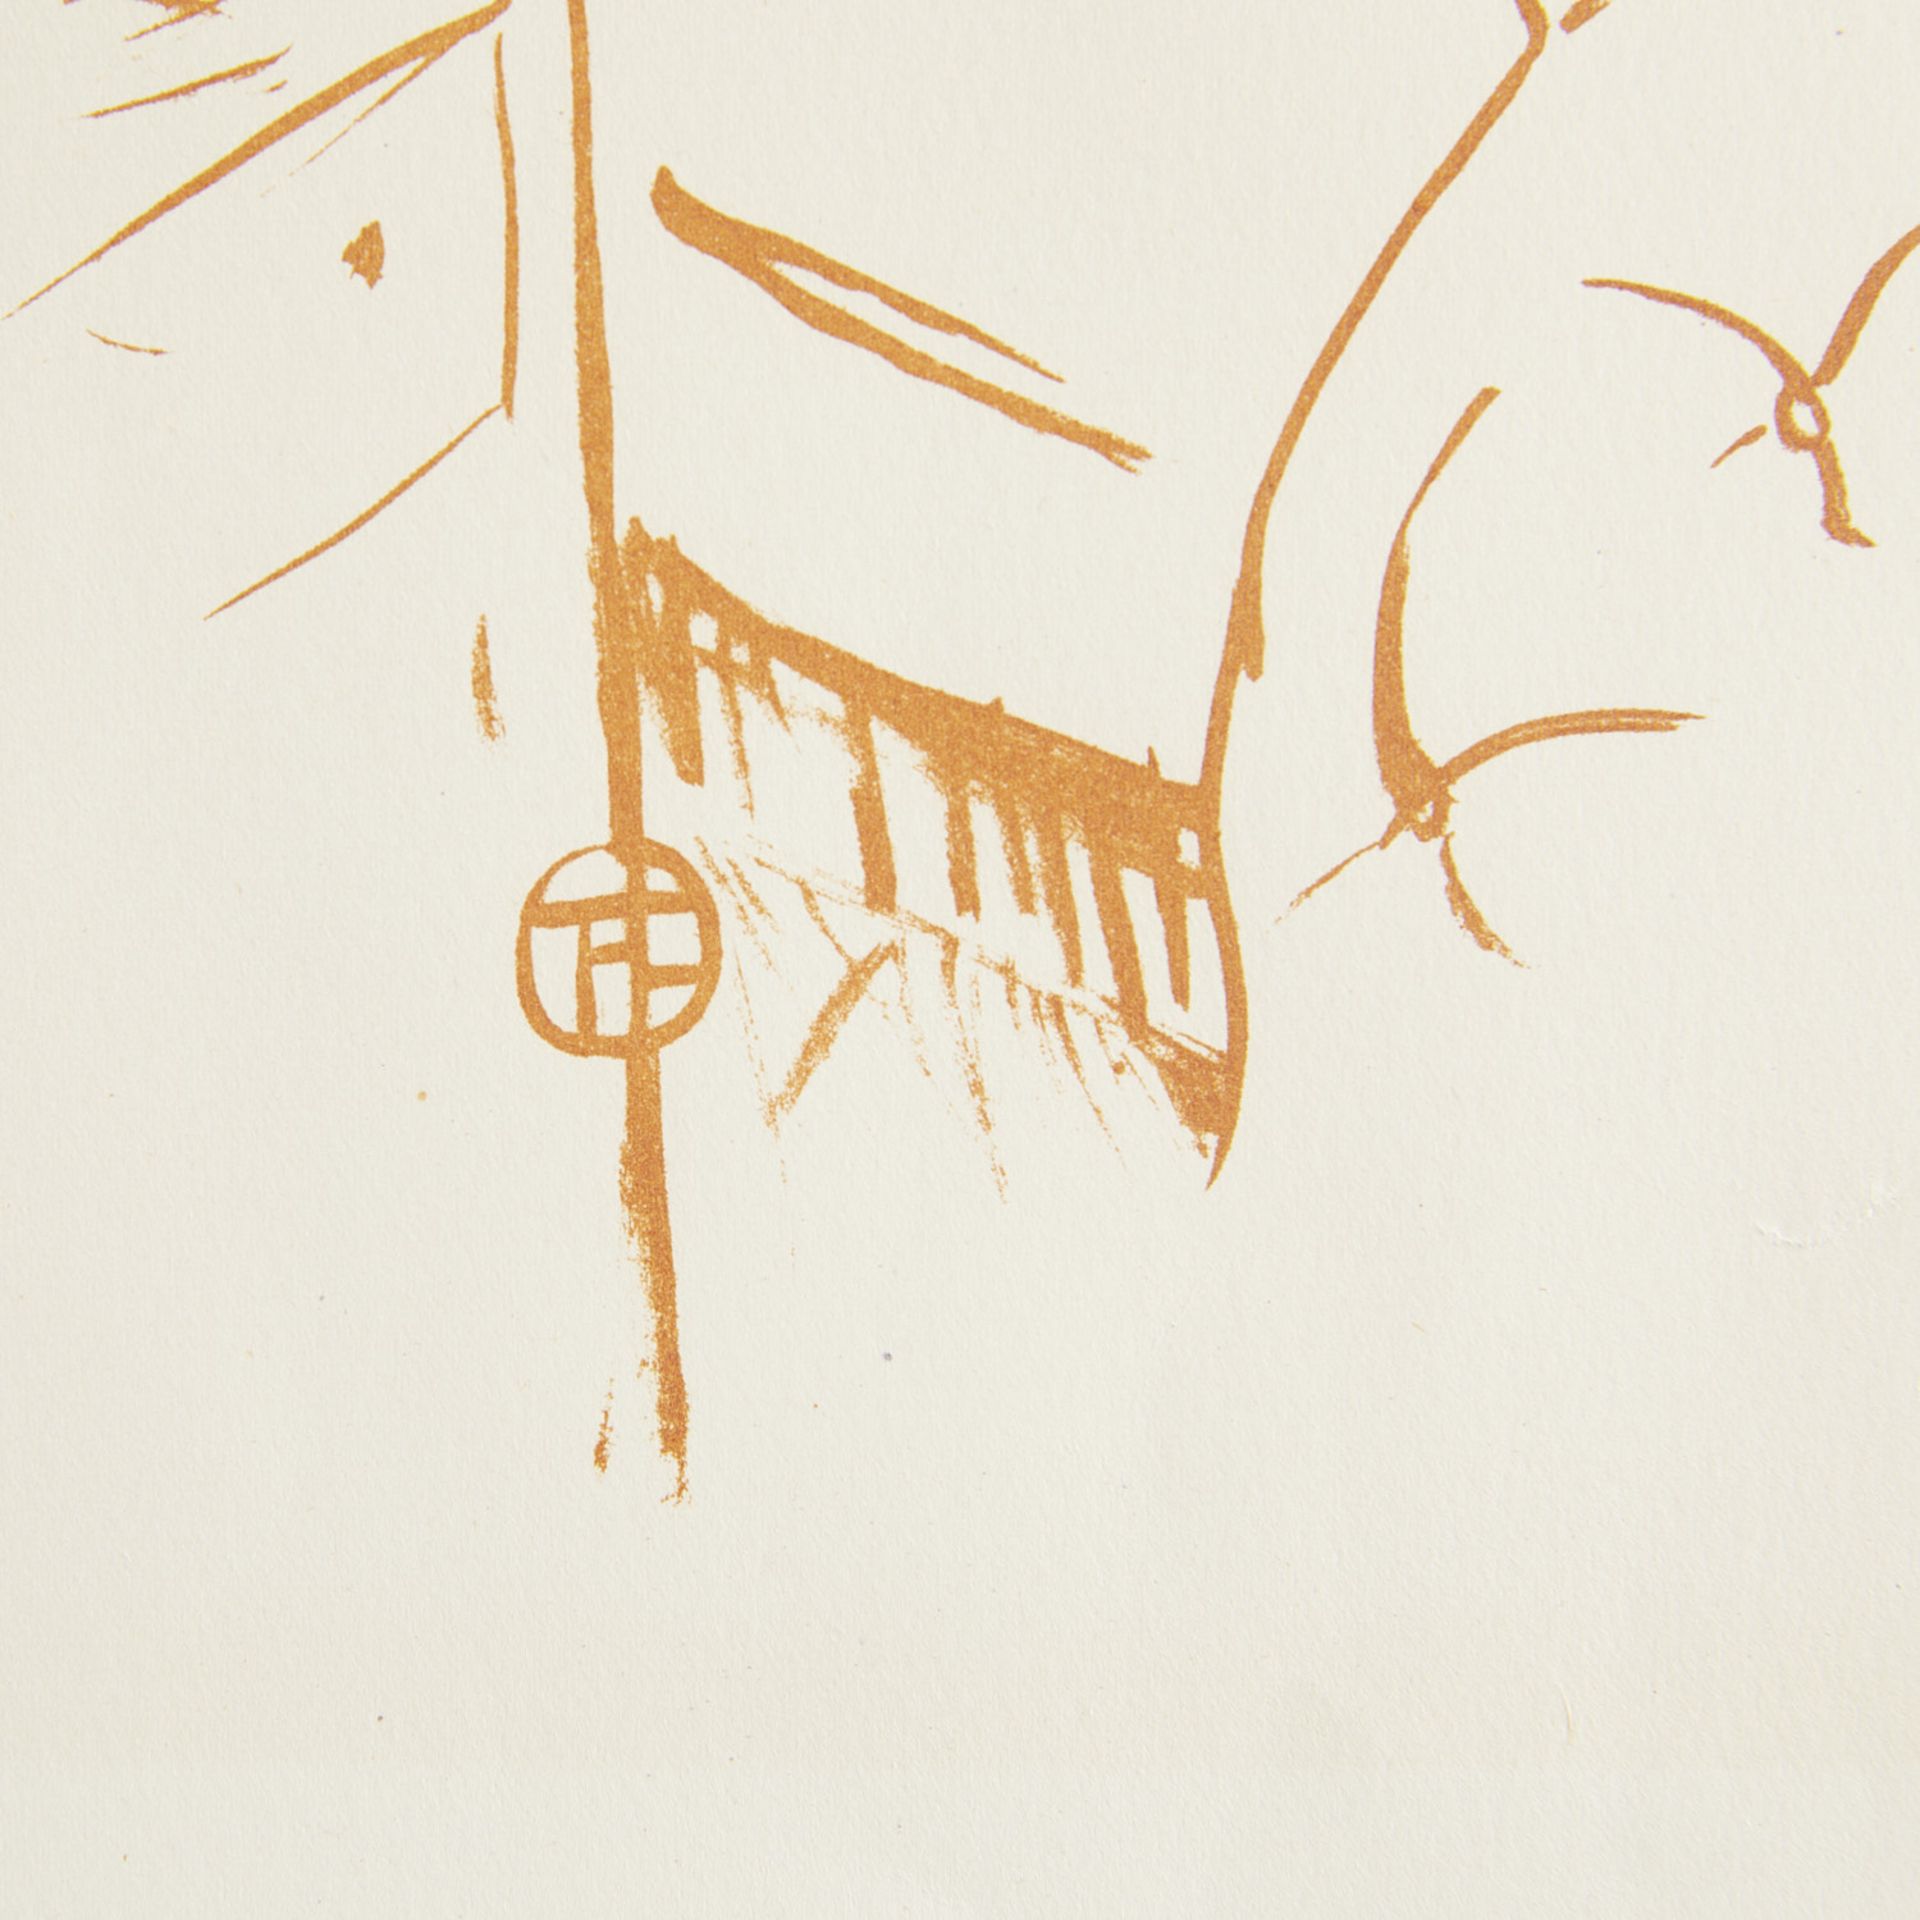 Toulouse Lautrec "Ta Bouche" Lithograph - Image 2 of 5